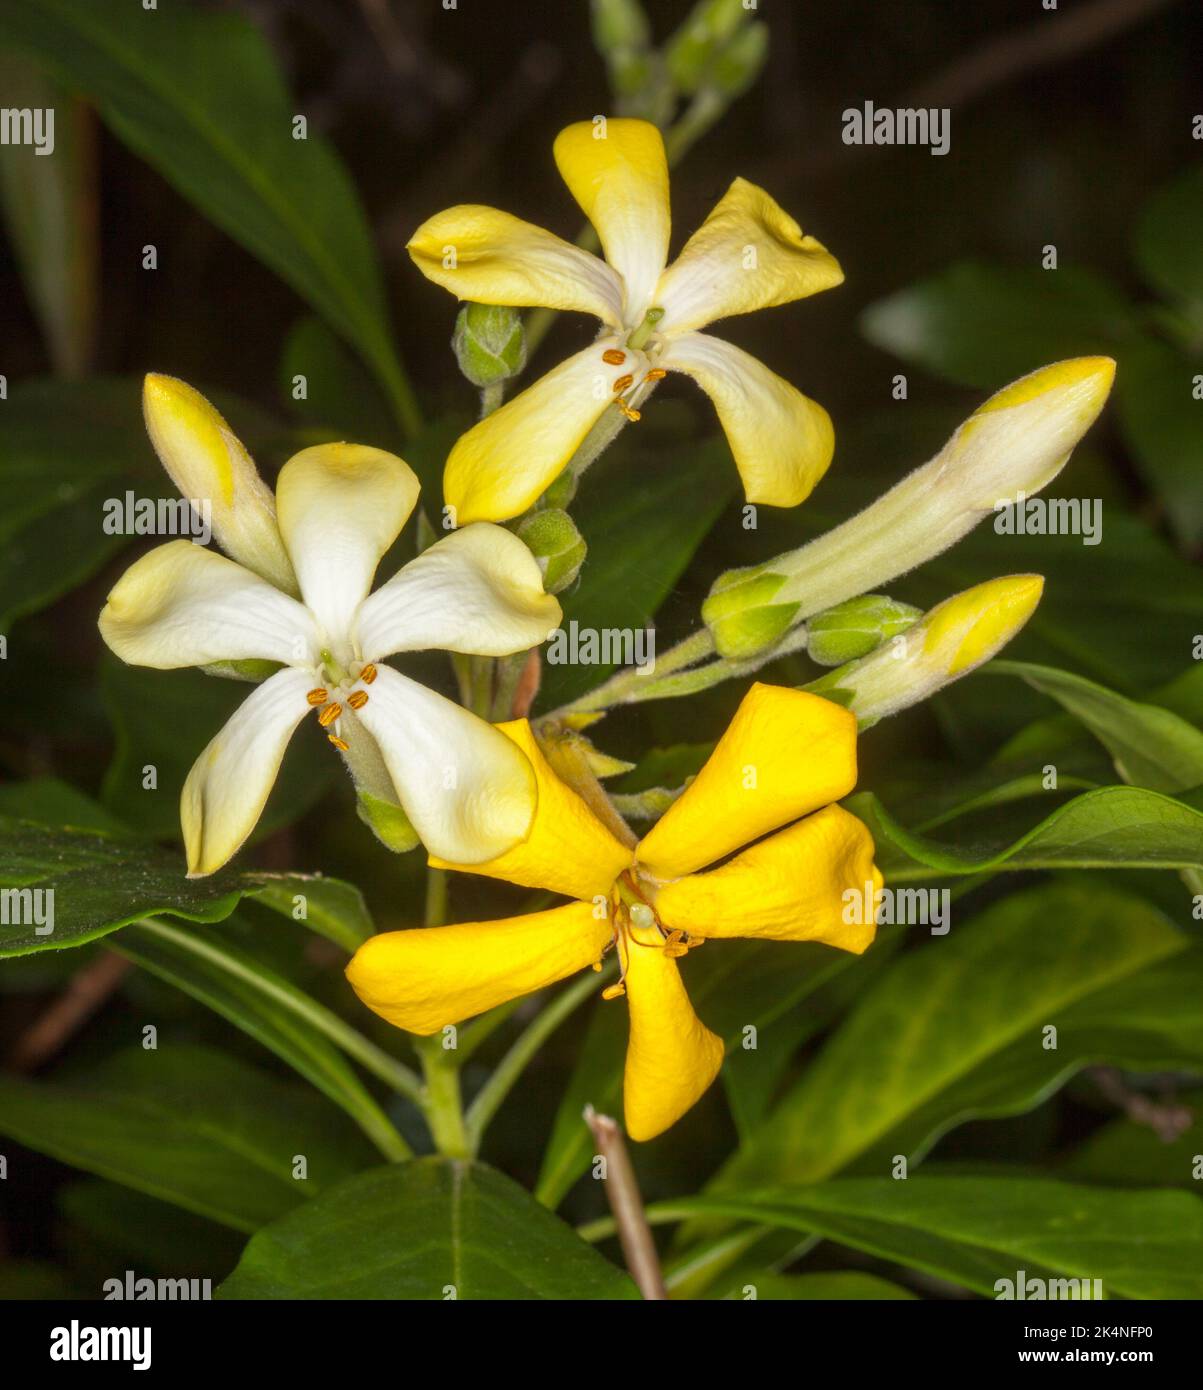 Cluster of yellow and white perfumed flowers of Hymenosporum flavum, Australian native frangipani tree, on background of dark green leaves Stock Photo